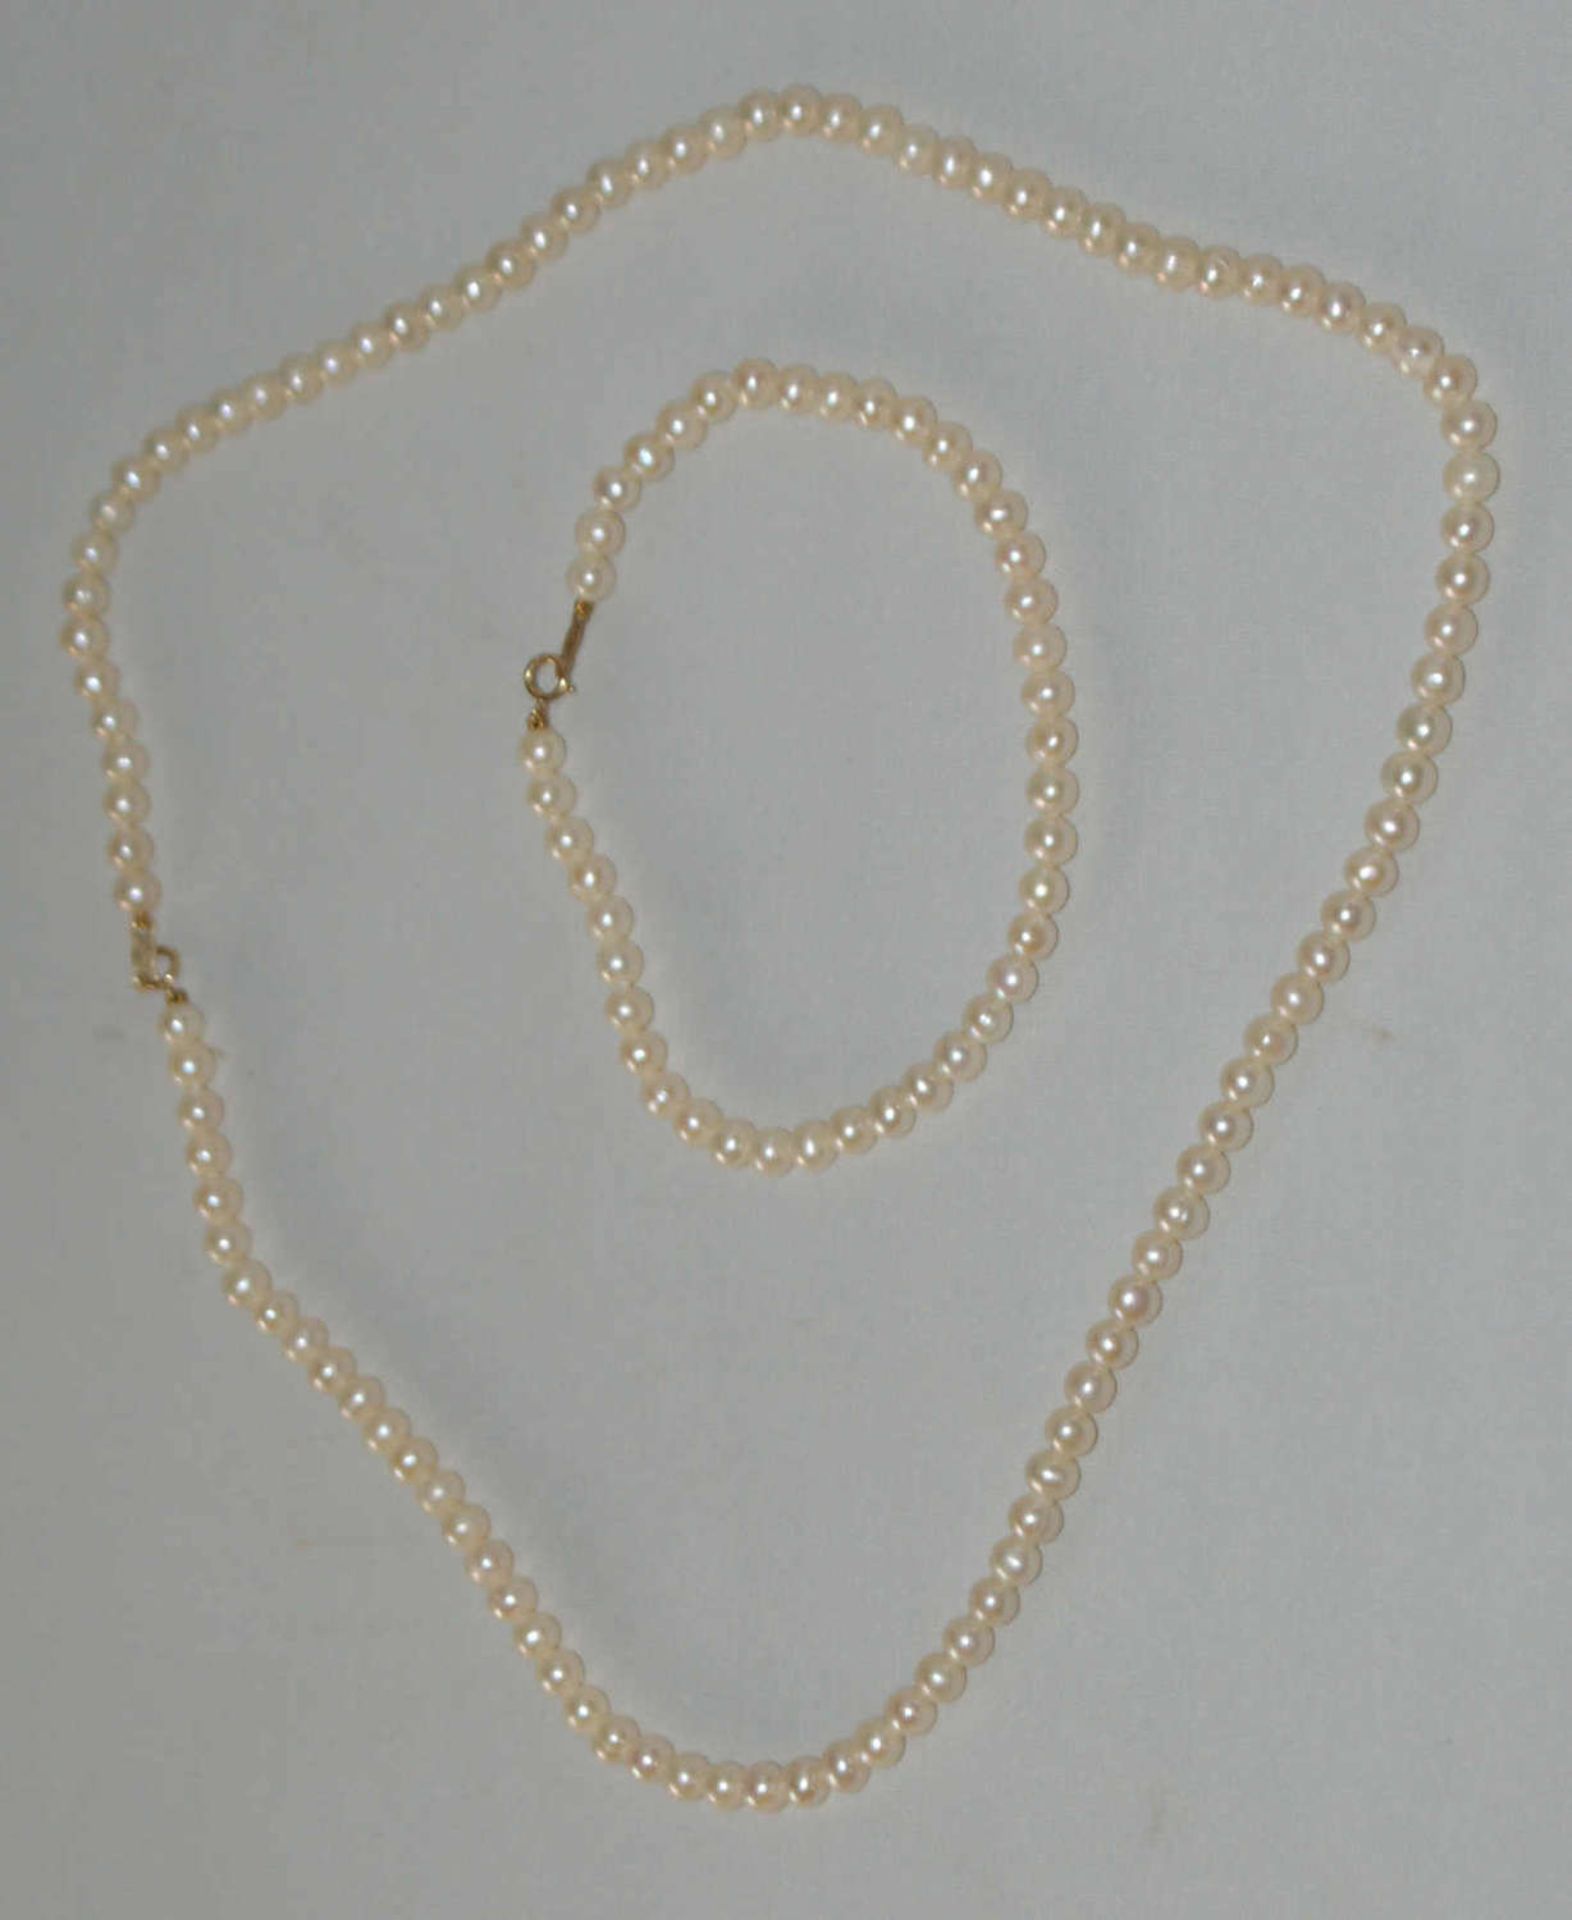 Schmuckset, bestehend aus 1 Echt-Perlenkette, Länge ca. 50 cm, sowie 1 Echt-Perlenarmband, Länge ca.